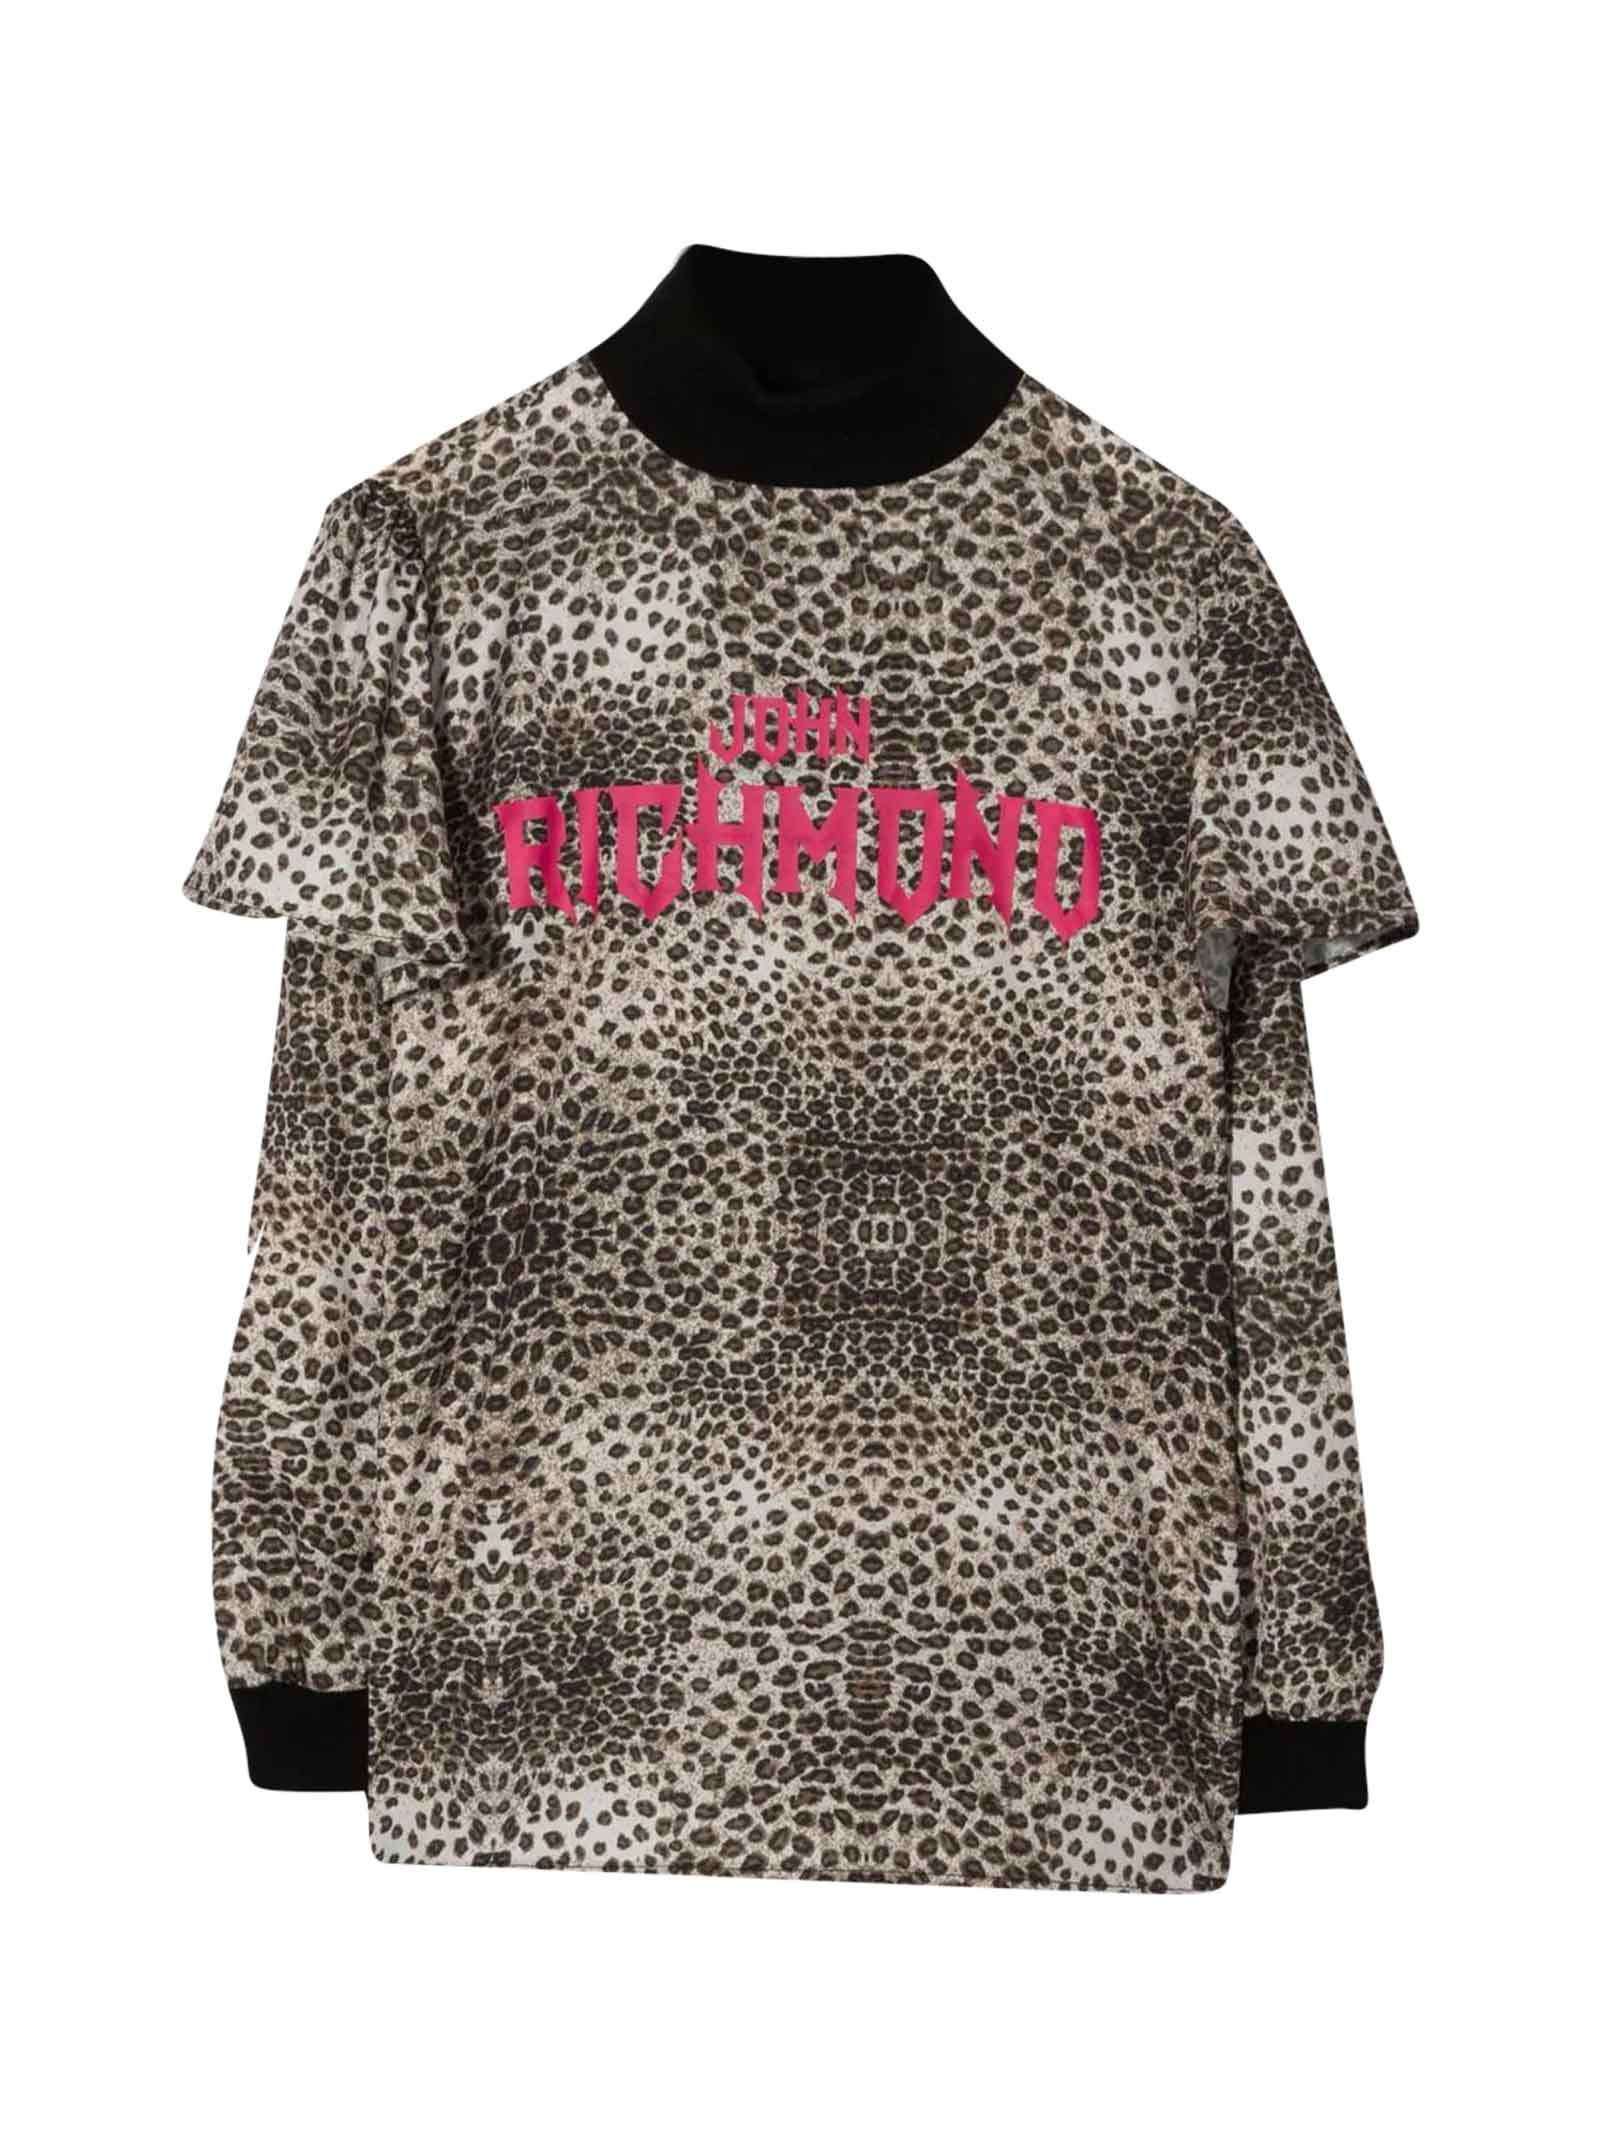 John Richmond Leopard Print Sweater